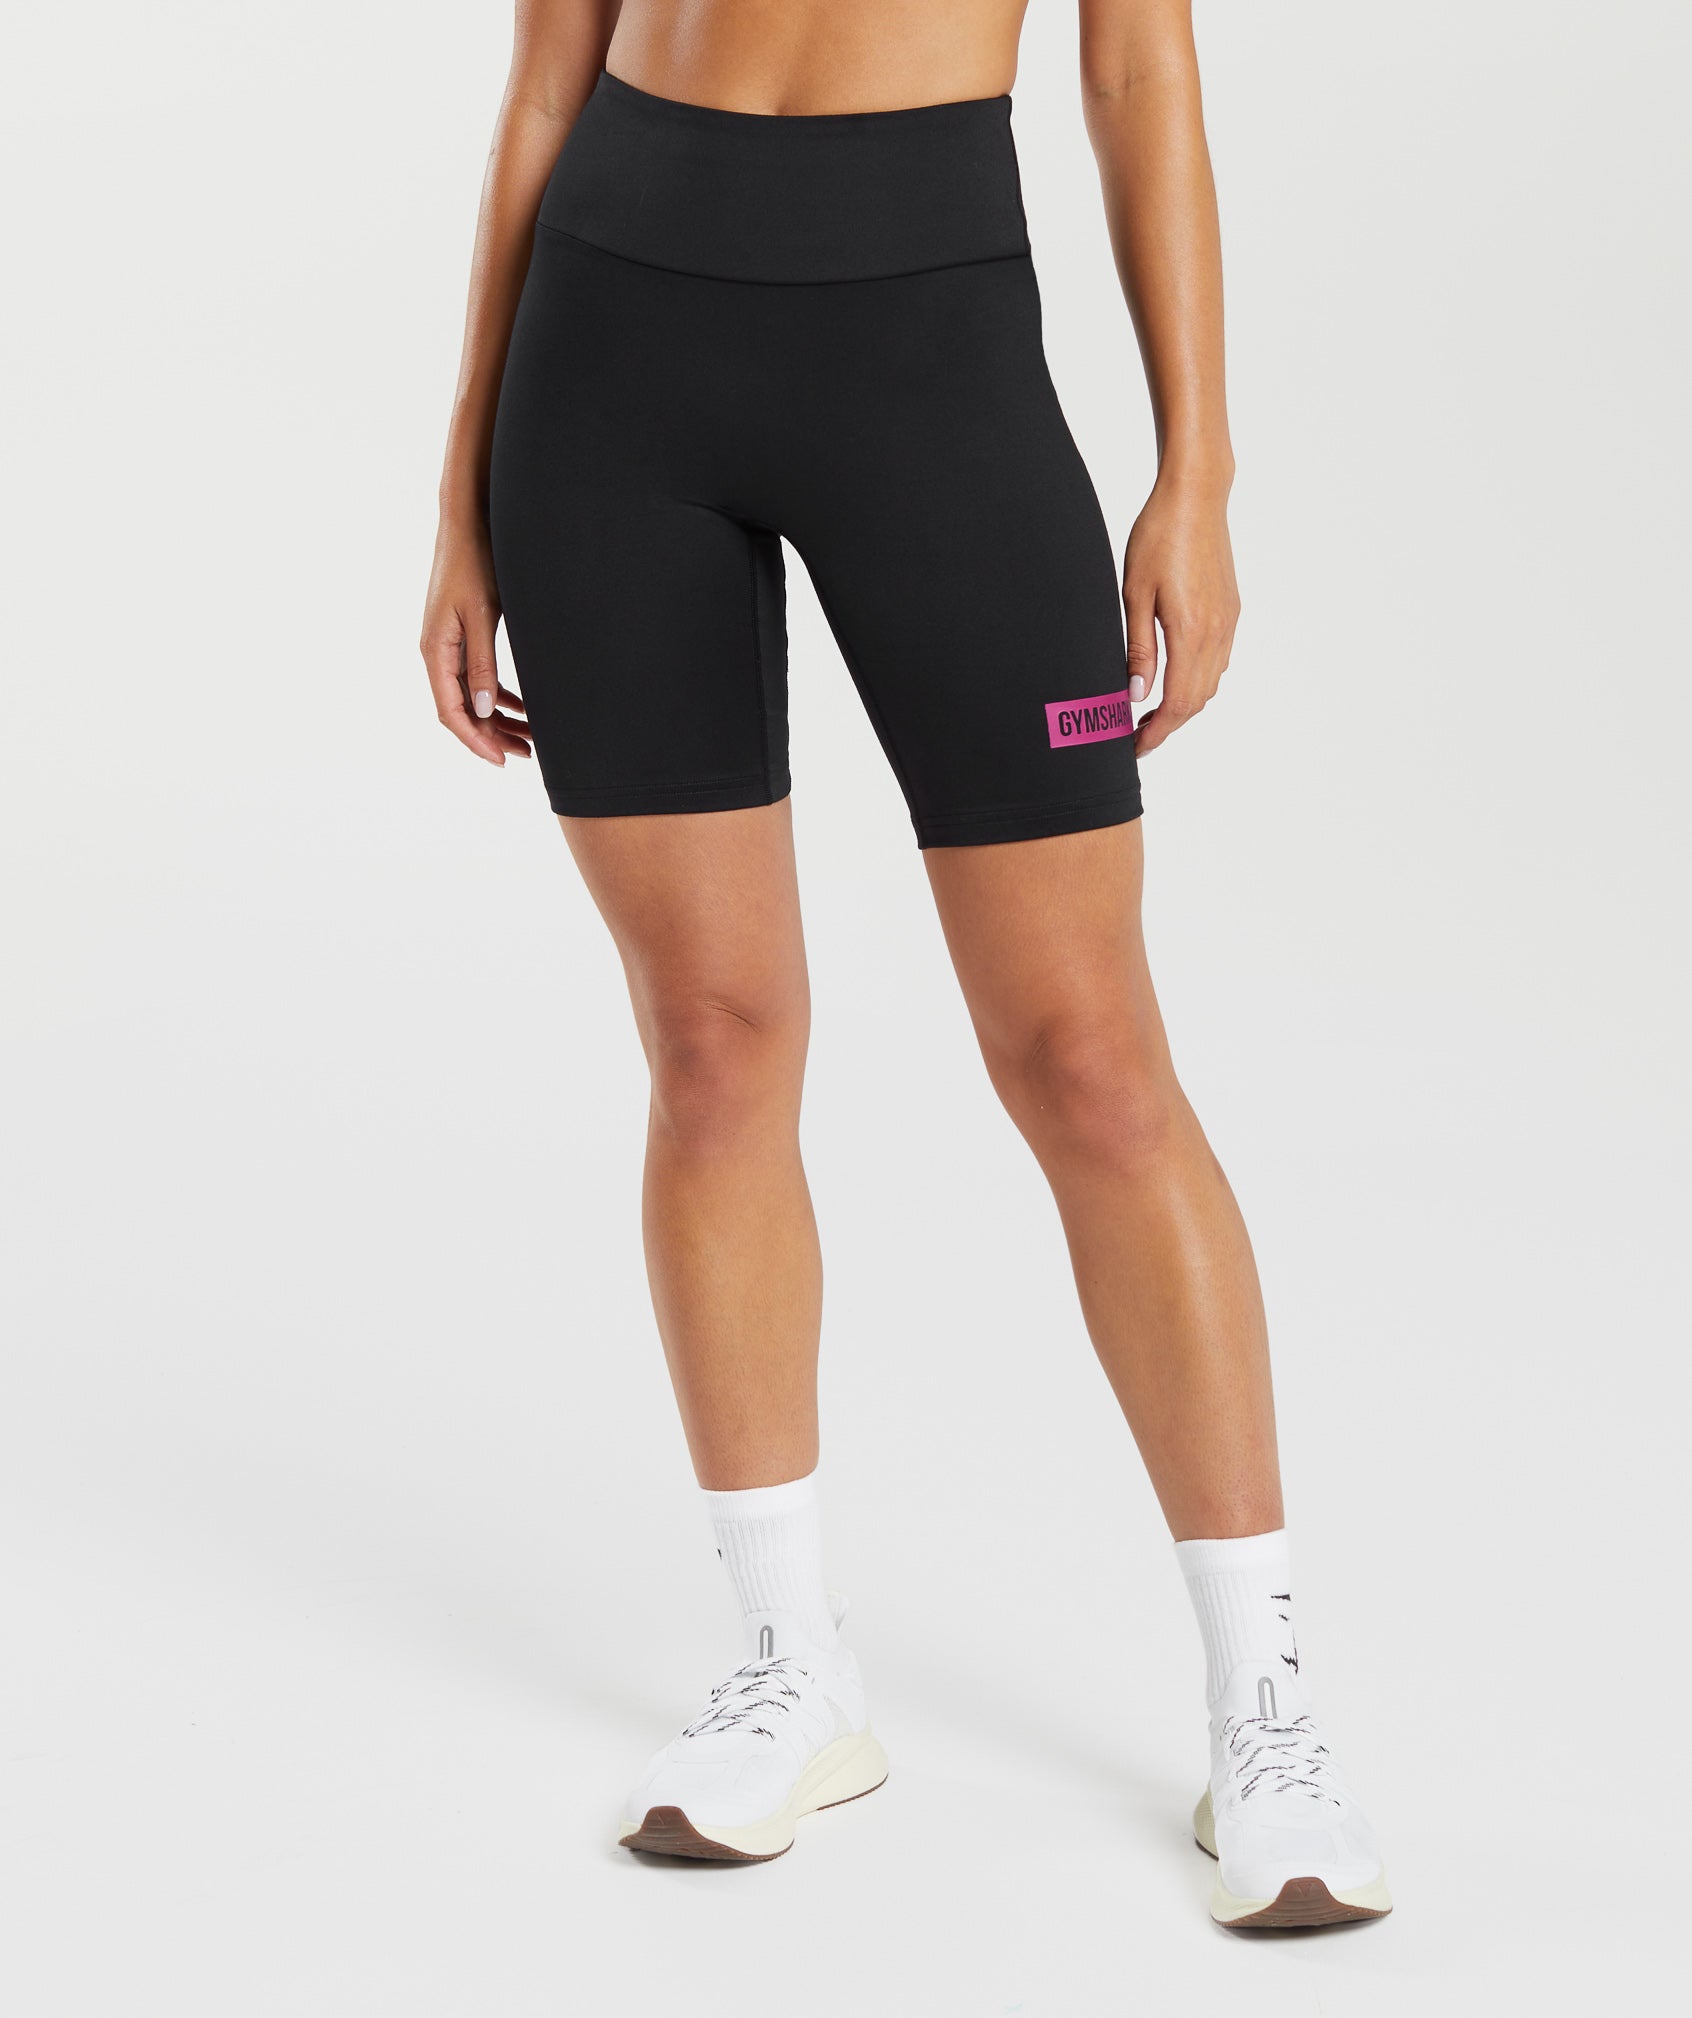 Custom Biker Shorts, Fitness Shorts Women, Bike Shorts, Active